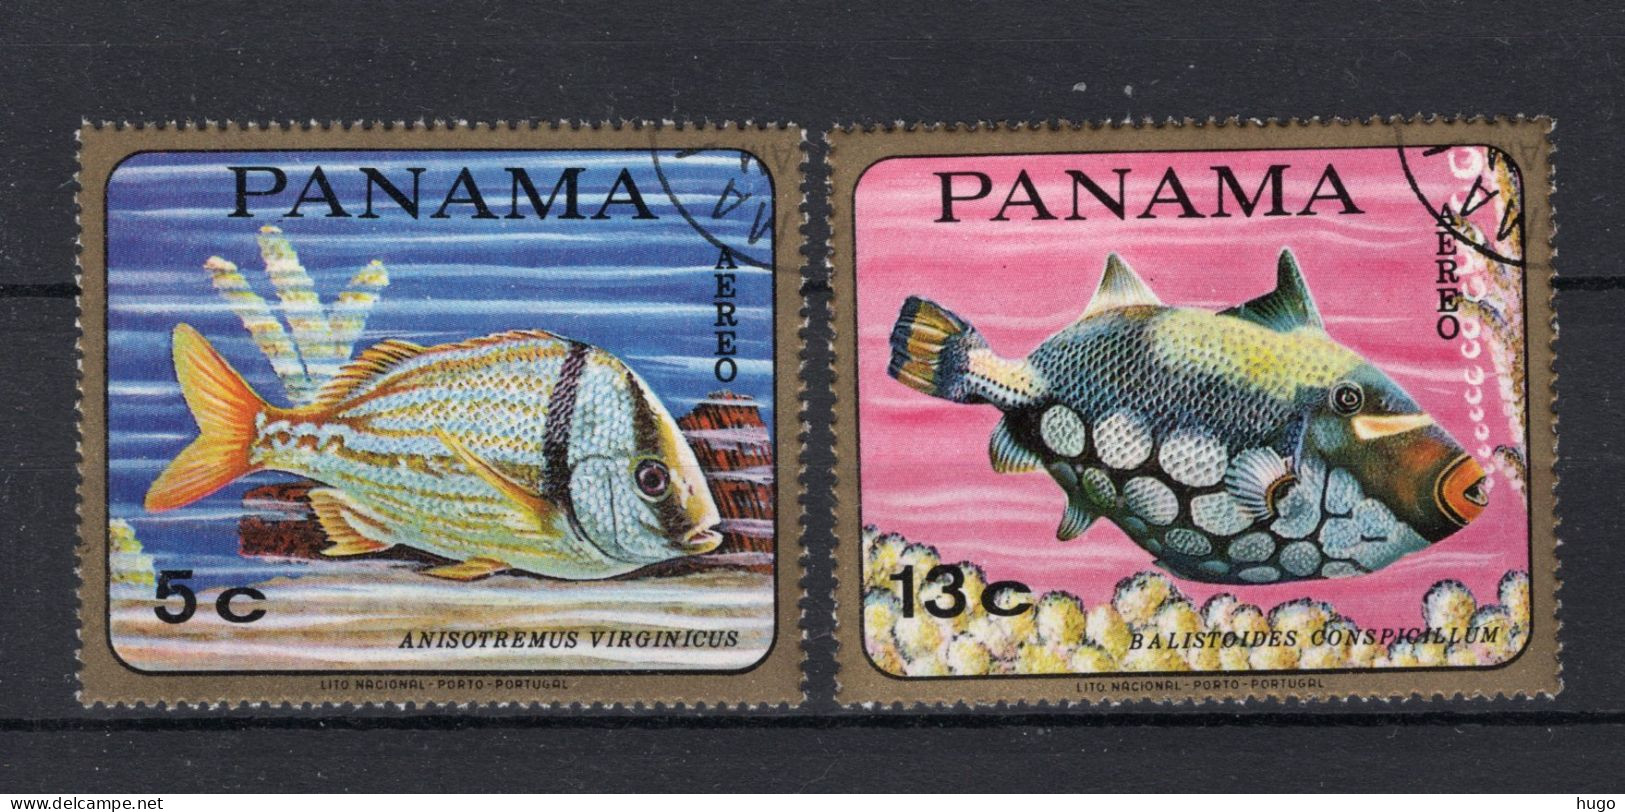 PANAMA Yt. PA450/451° Gestempeld Luchtpost 1968 - Panamá